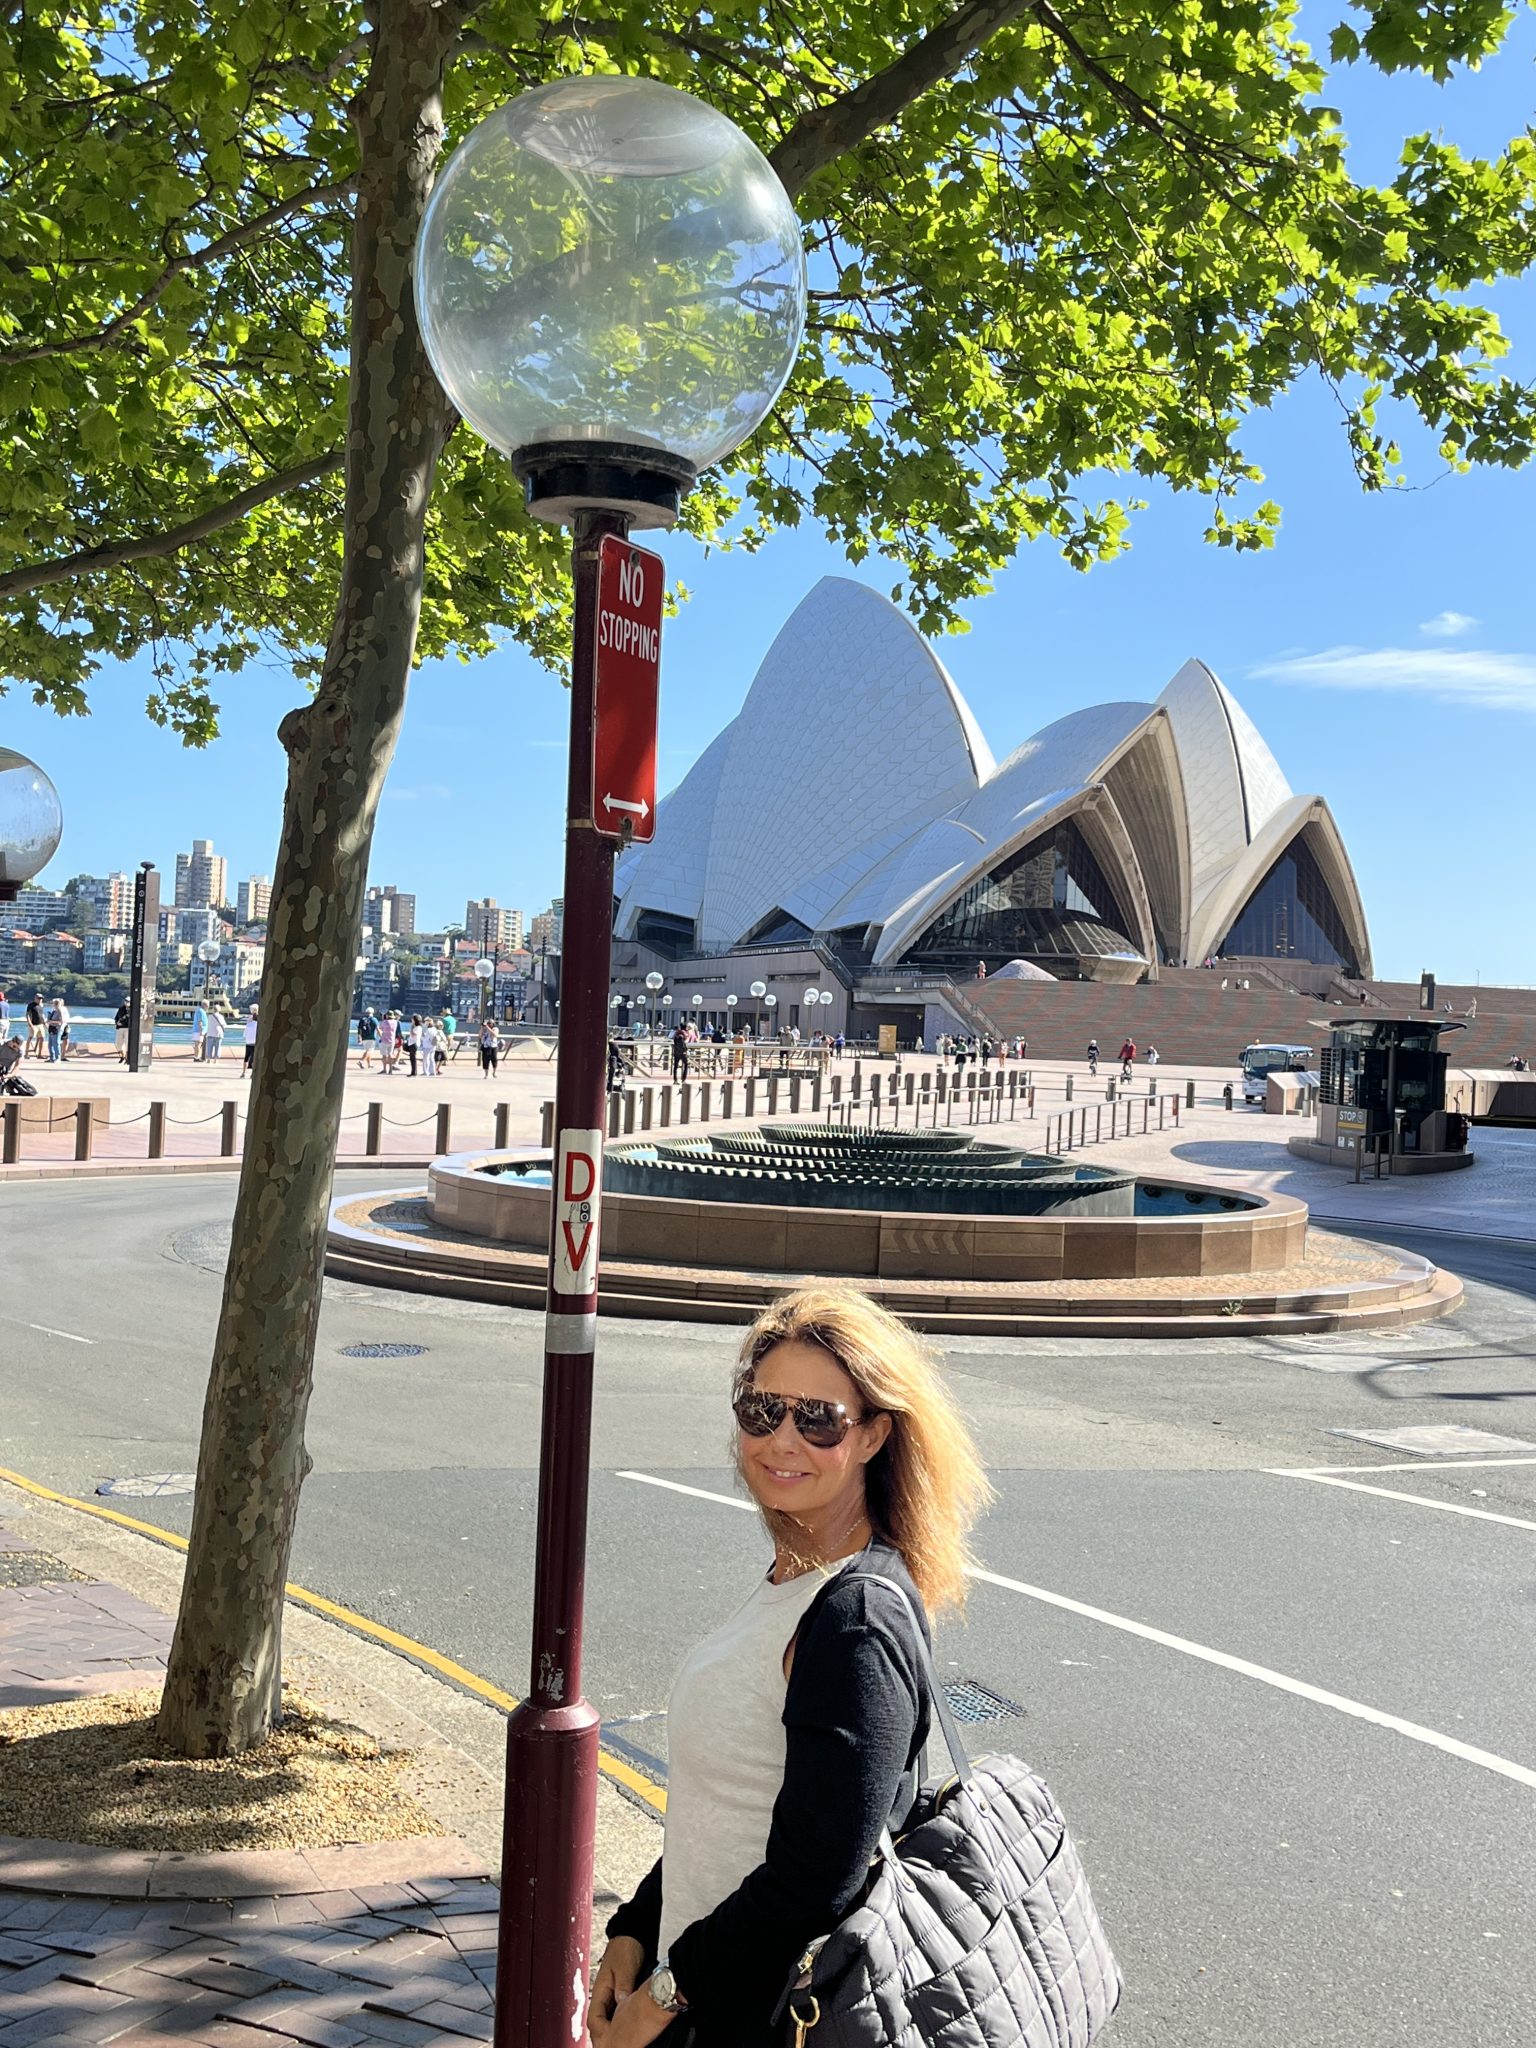 Circular Quay in Sydney